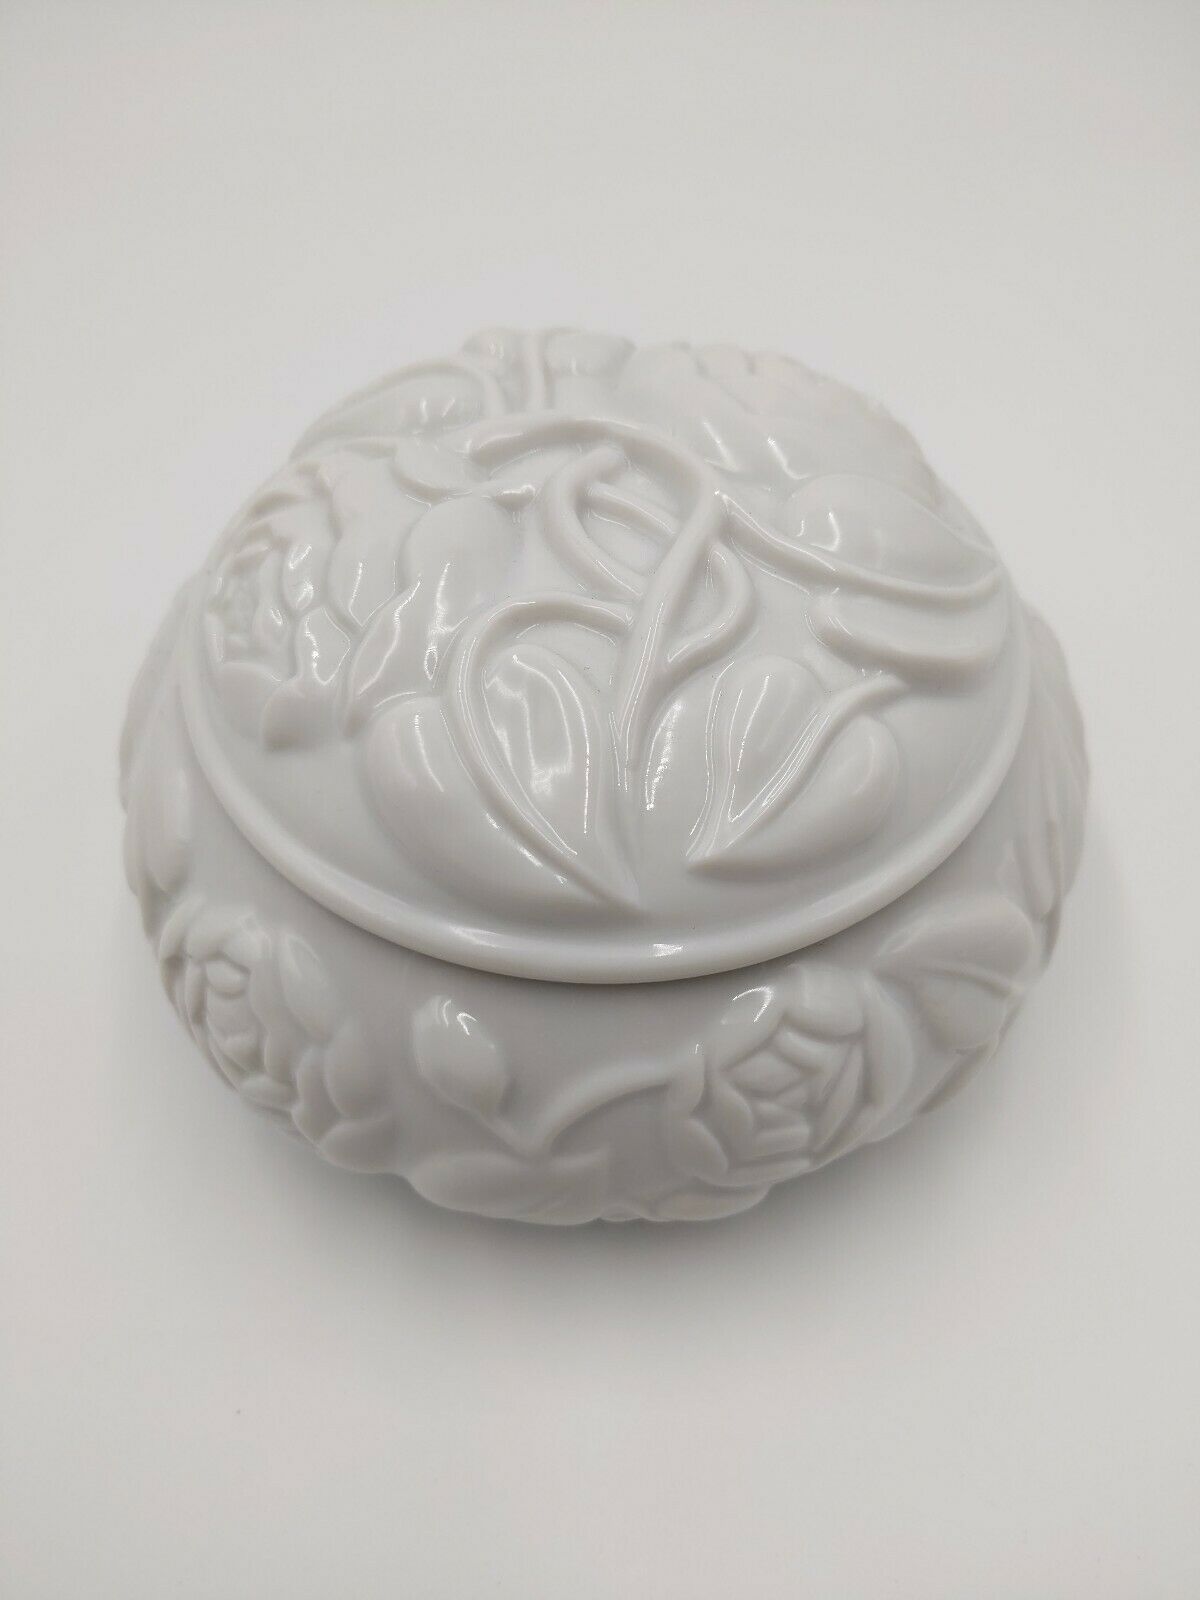 Raised Roses Blanc De Chine Vanity Box Jar White Porcelain Germaine Monteil 5.5"